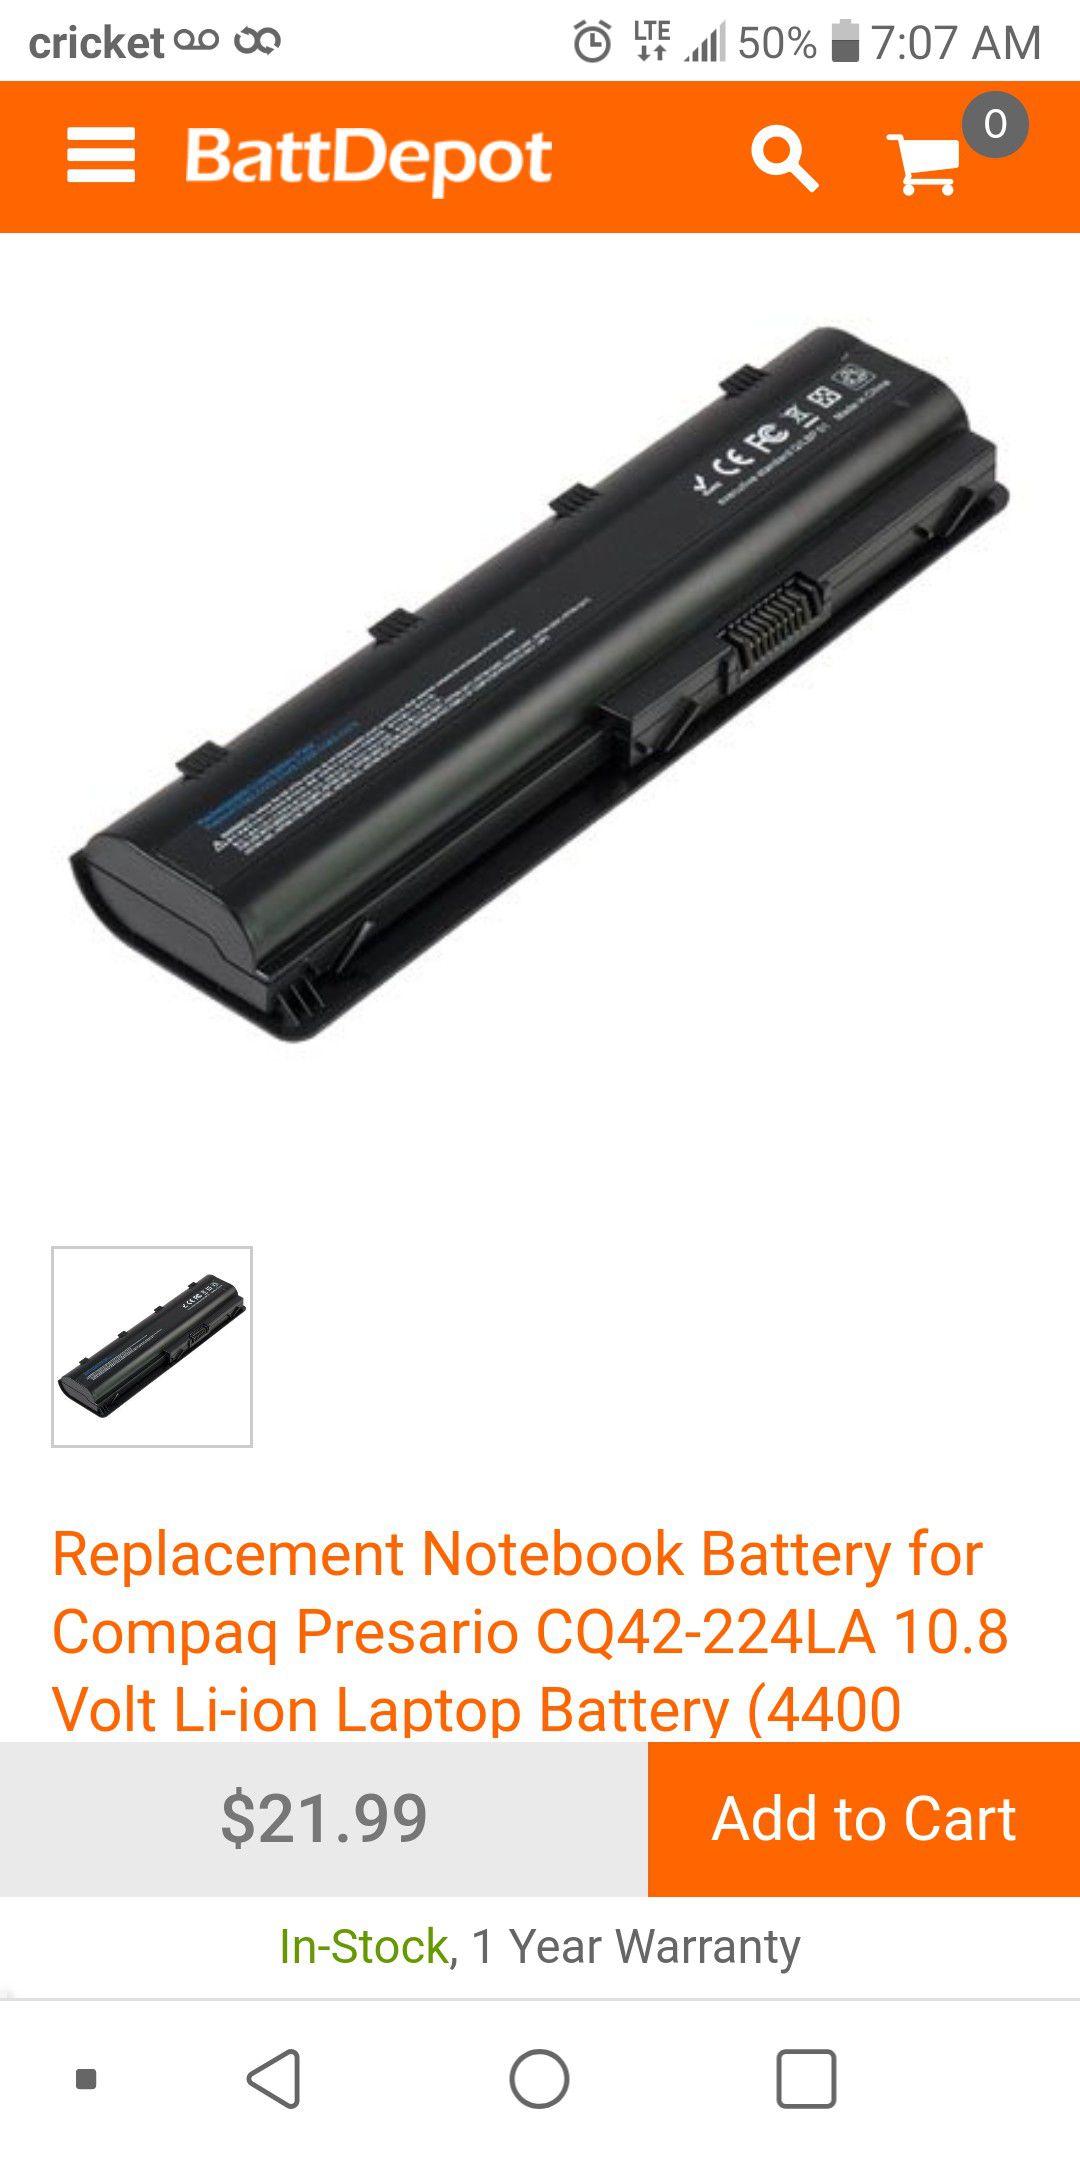 Replacement Notebook Battery for Compaq Presario CQ42-224LA 10.8 Volt Li-ion Laptop Battery (4400